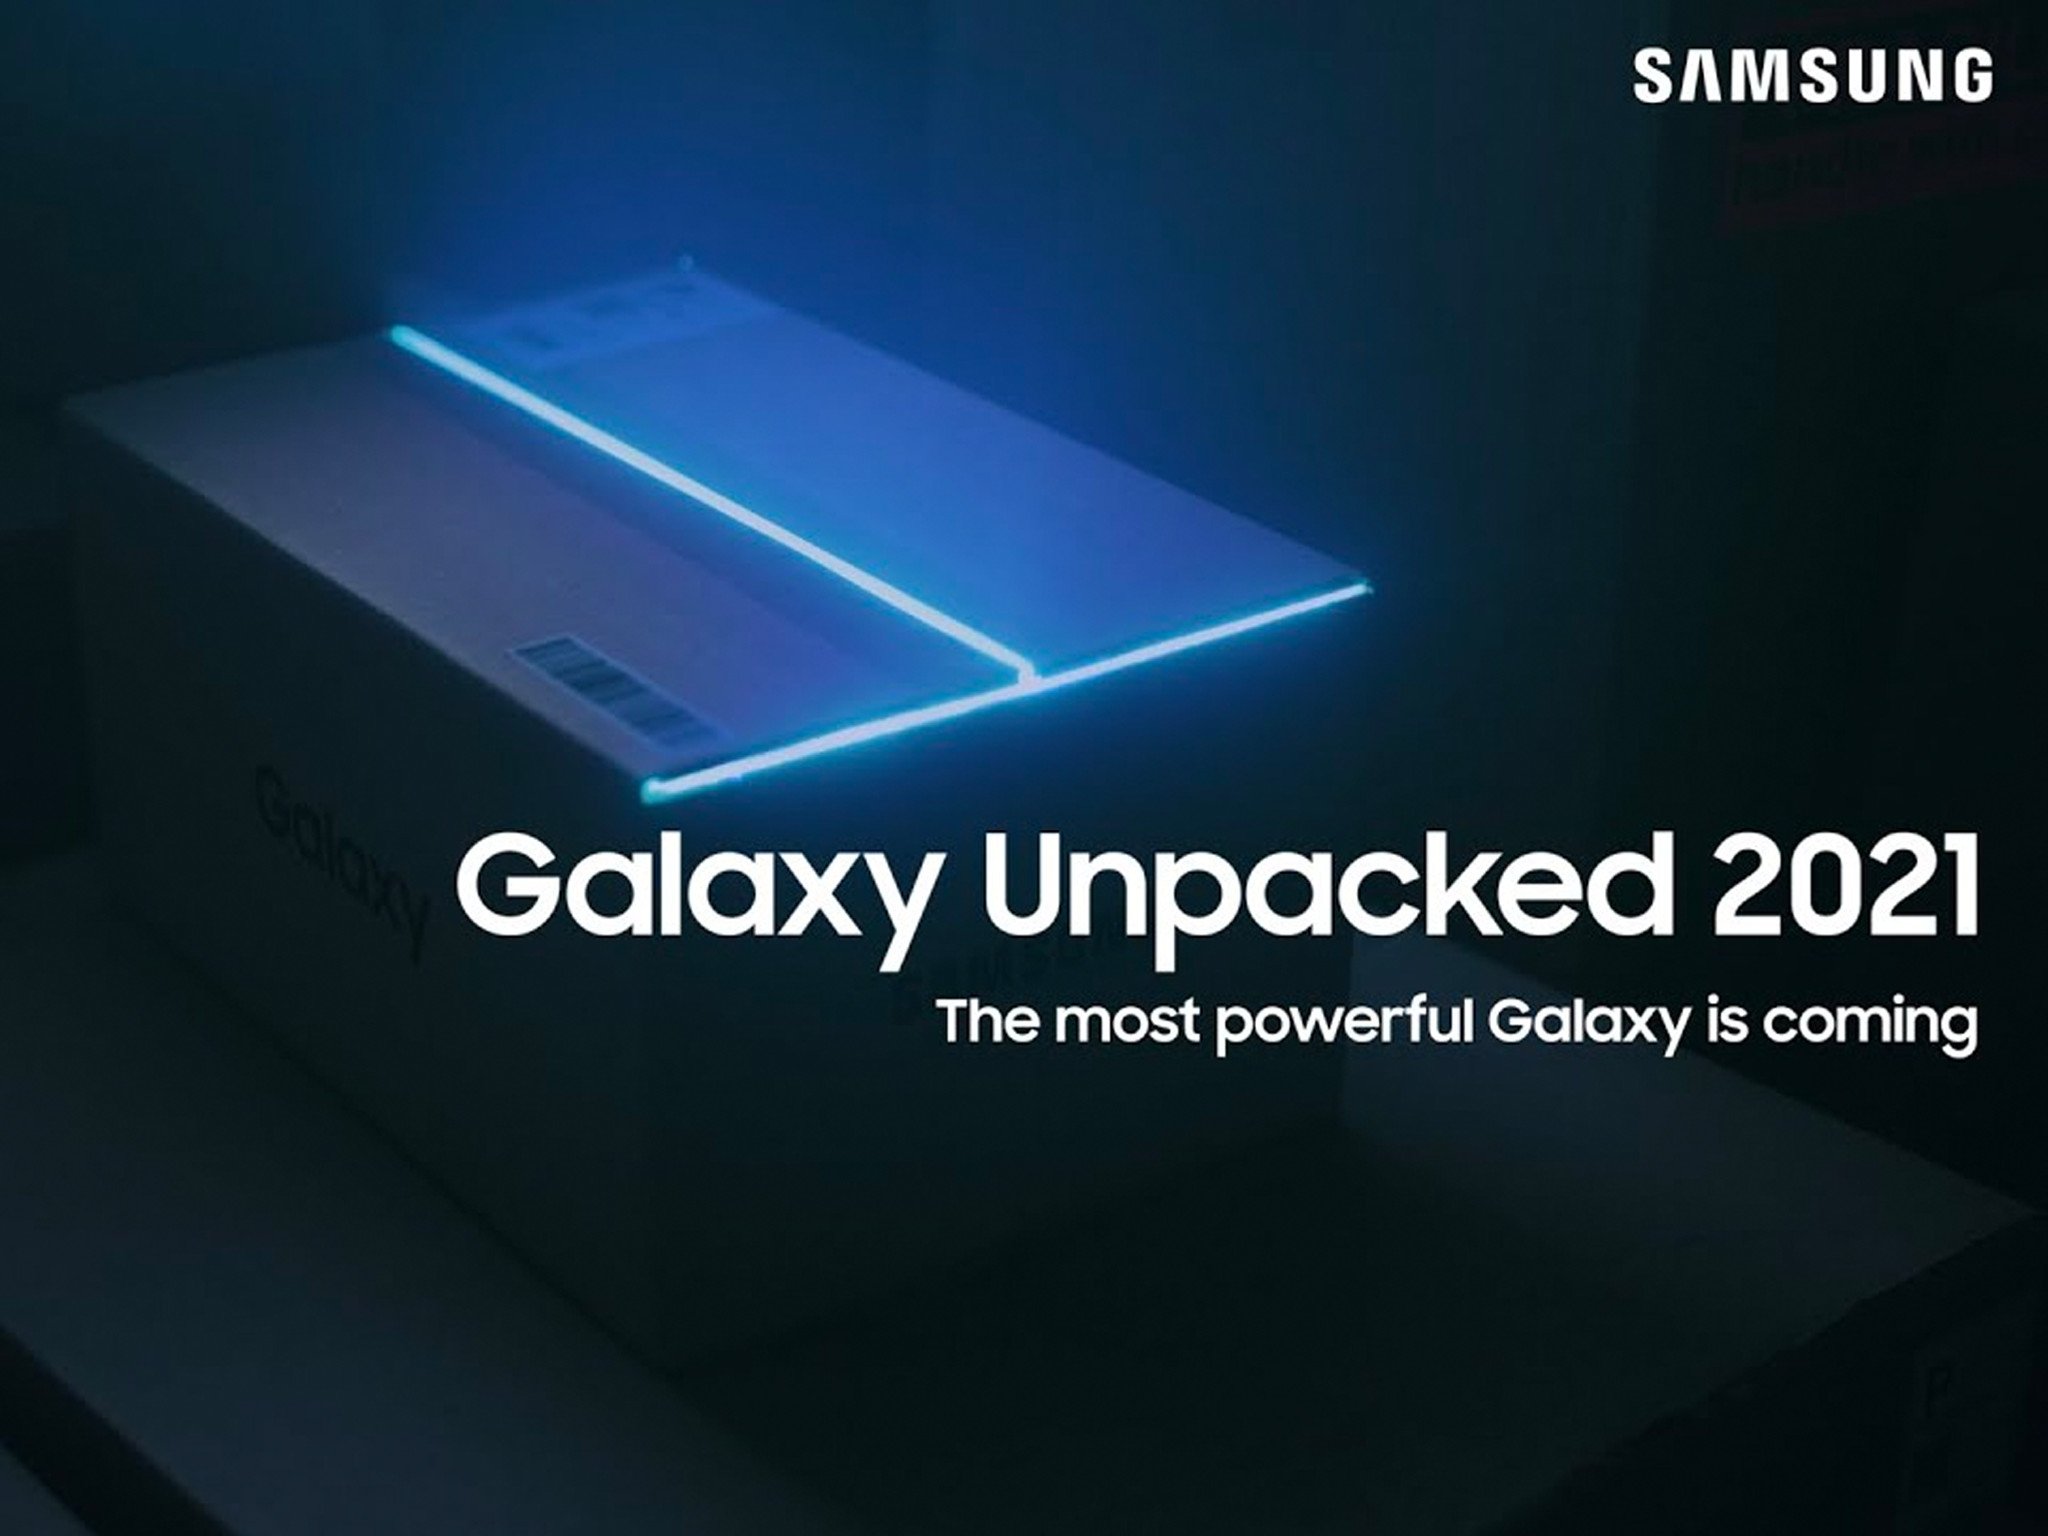 Samsung Galaxy Unpacked 2021 Hero